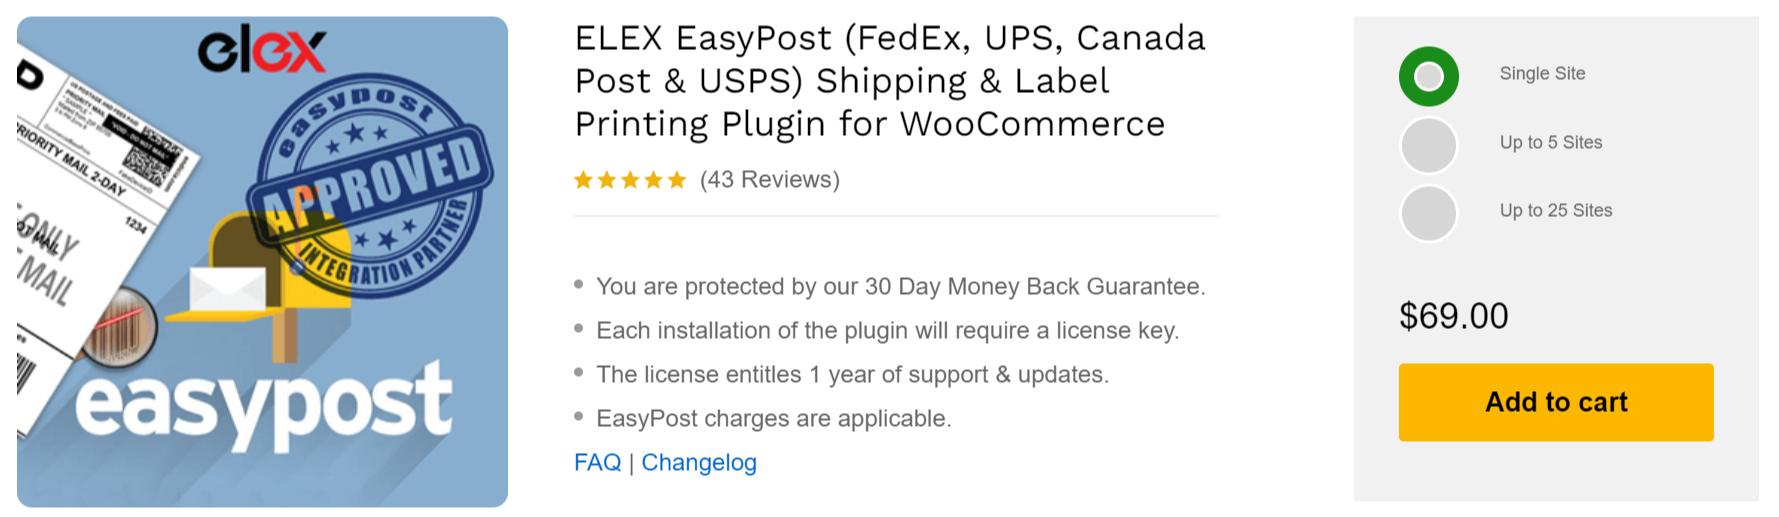 ELEX EasyPost Shipping & Label Printing Plugin